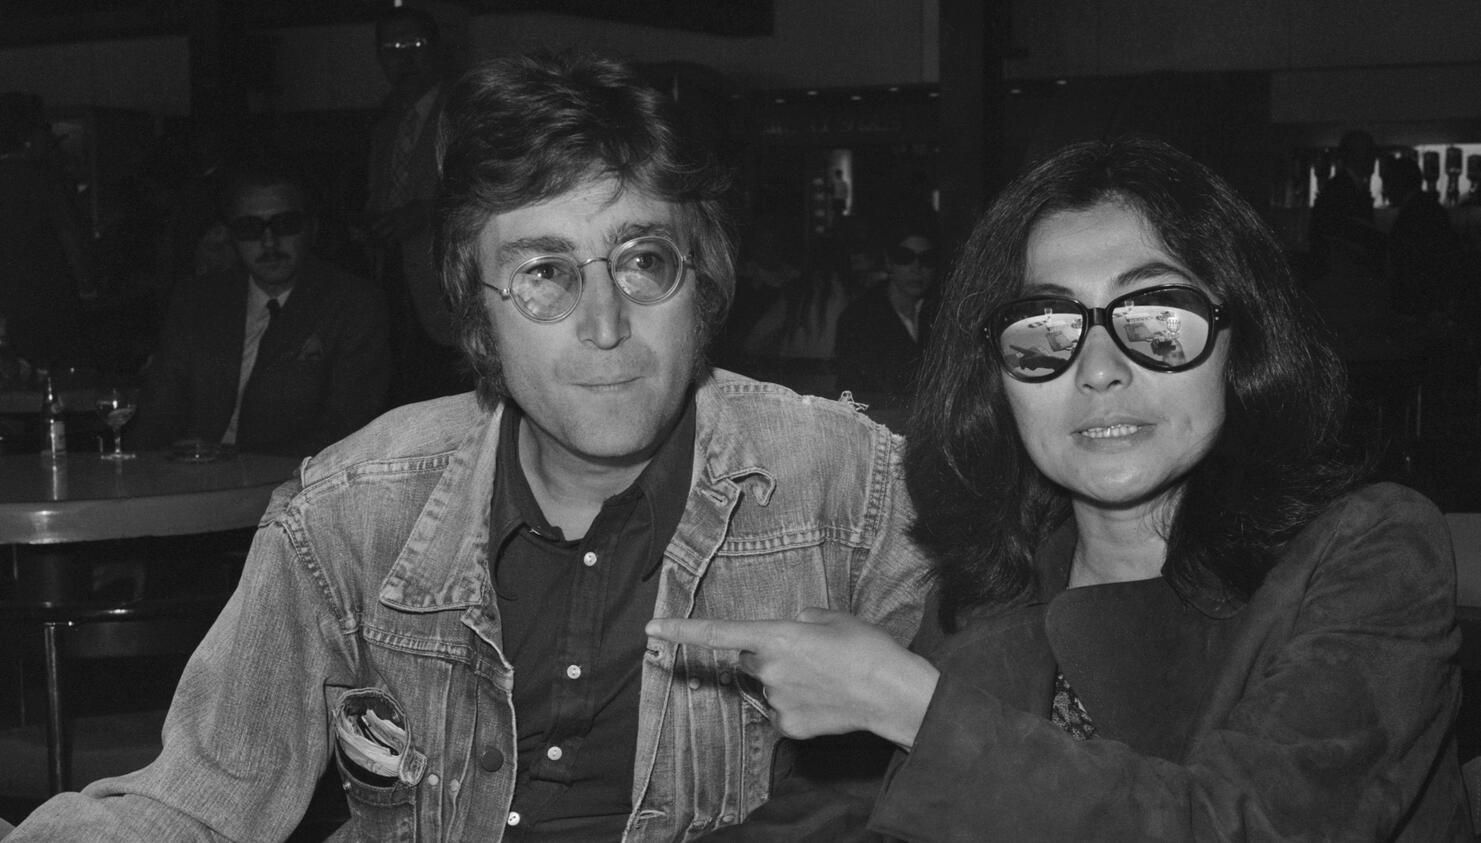 Hear a Newly-Discovered Demo of John Lennon's "Imagine"